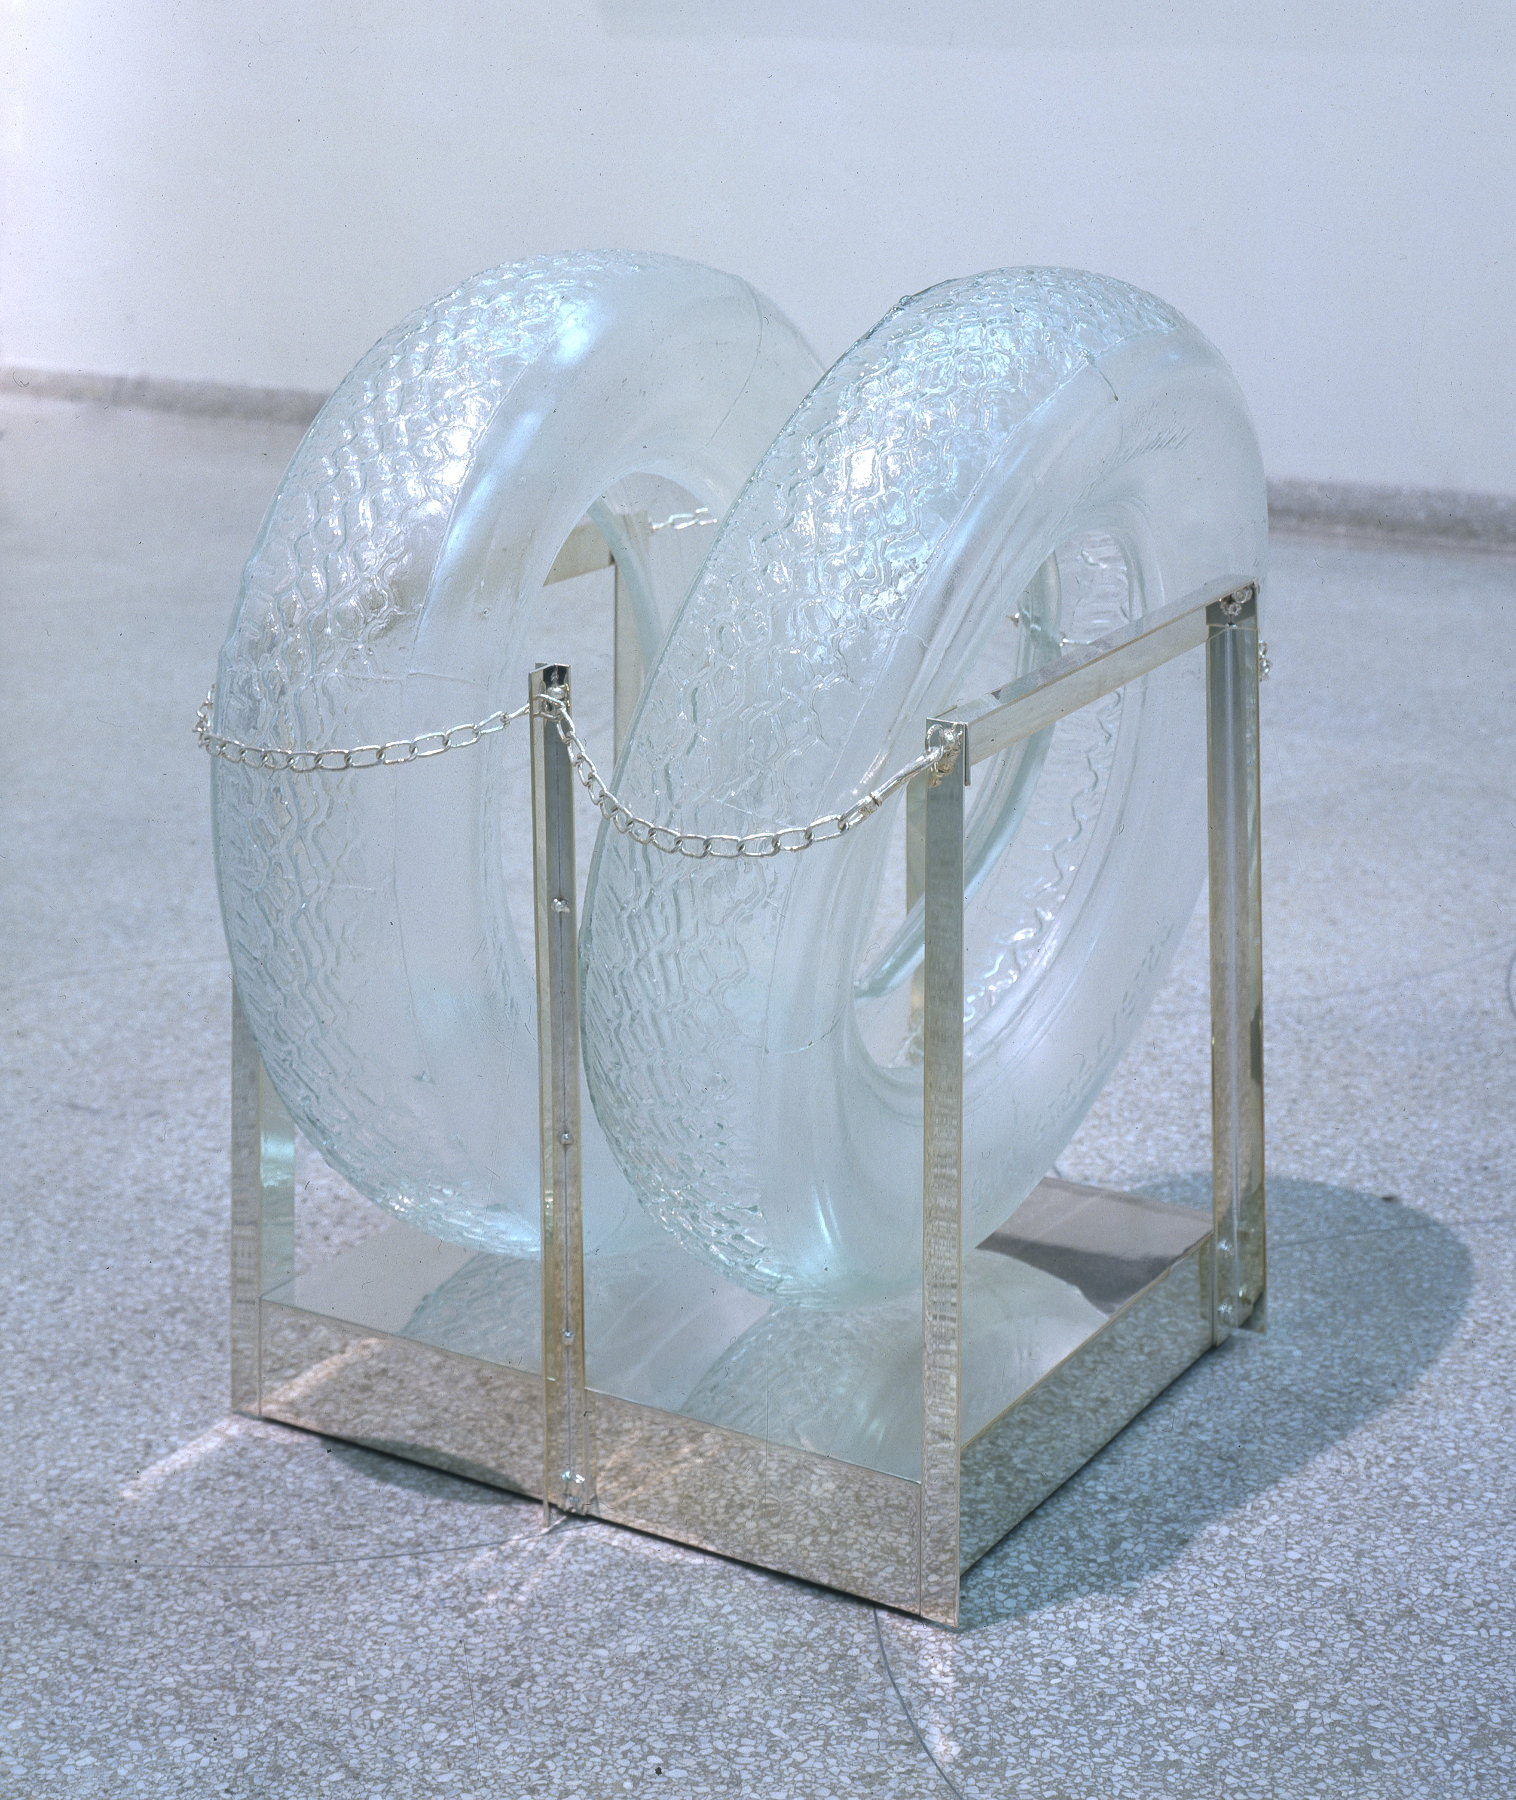 Robert Rauschenberg - Untitled (glass tires)